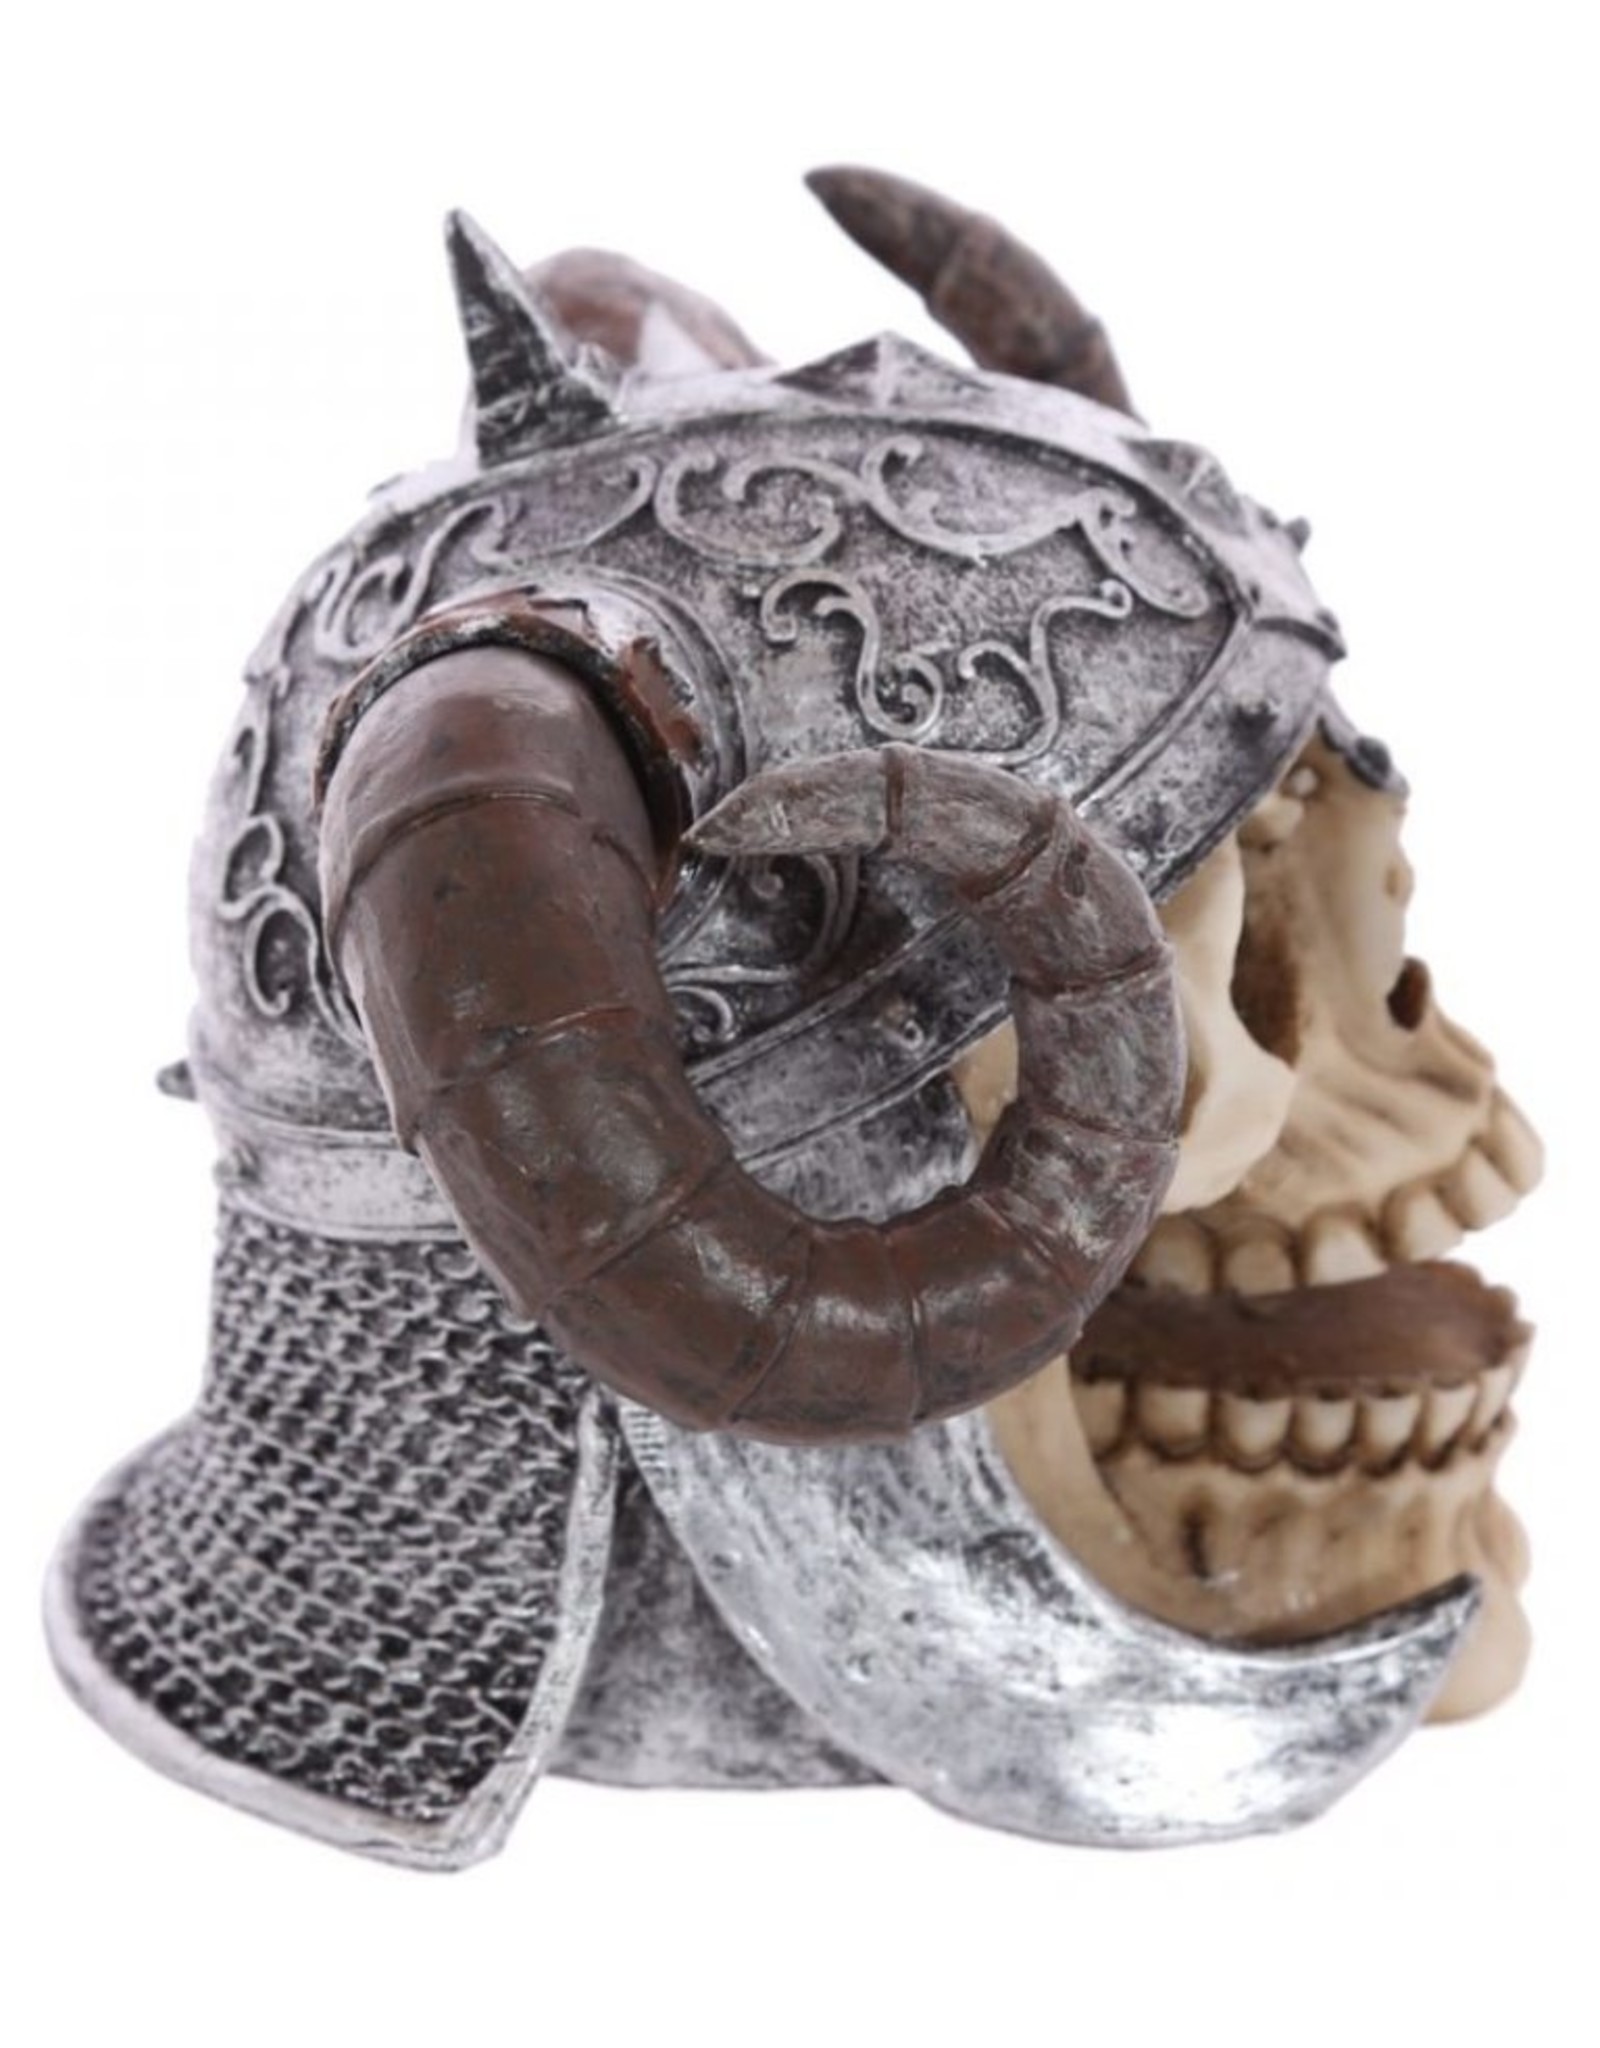 Trukado Skulls Skeletons Dragons - Twisted horns Viking Skull